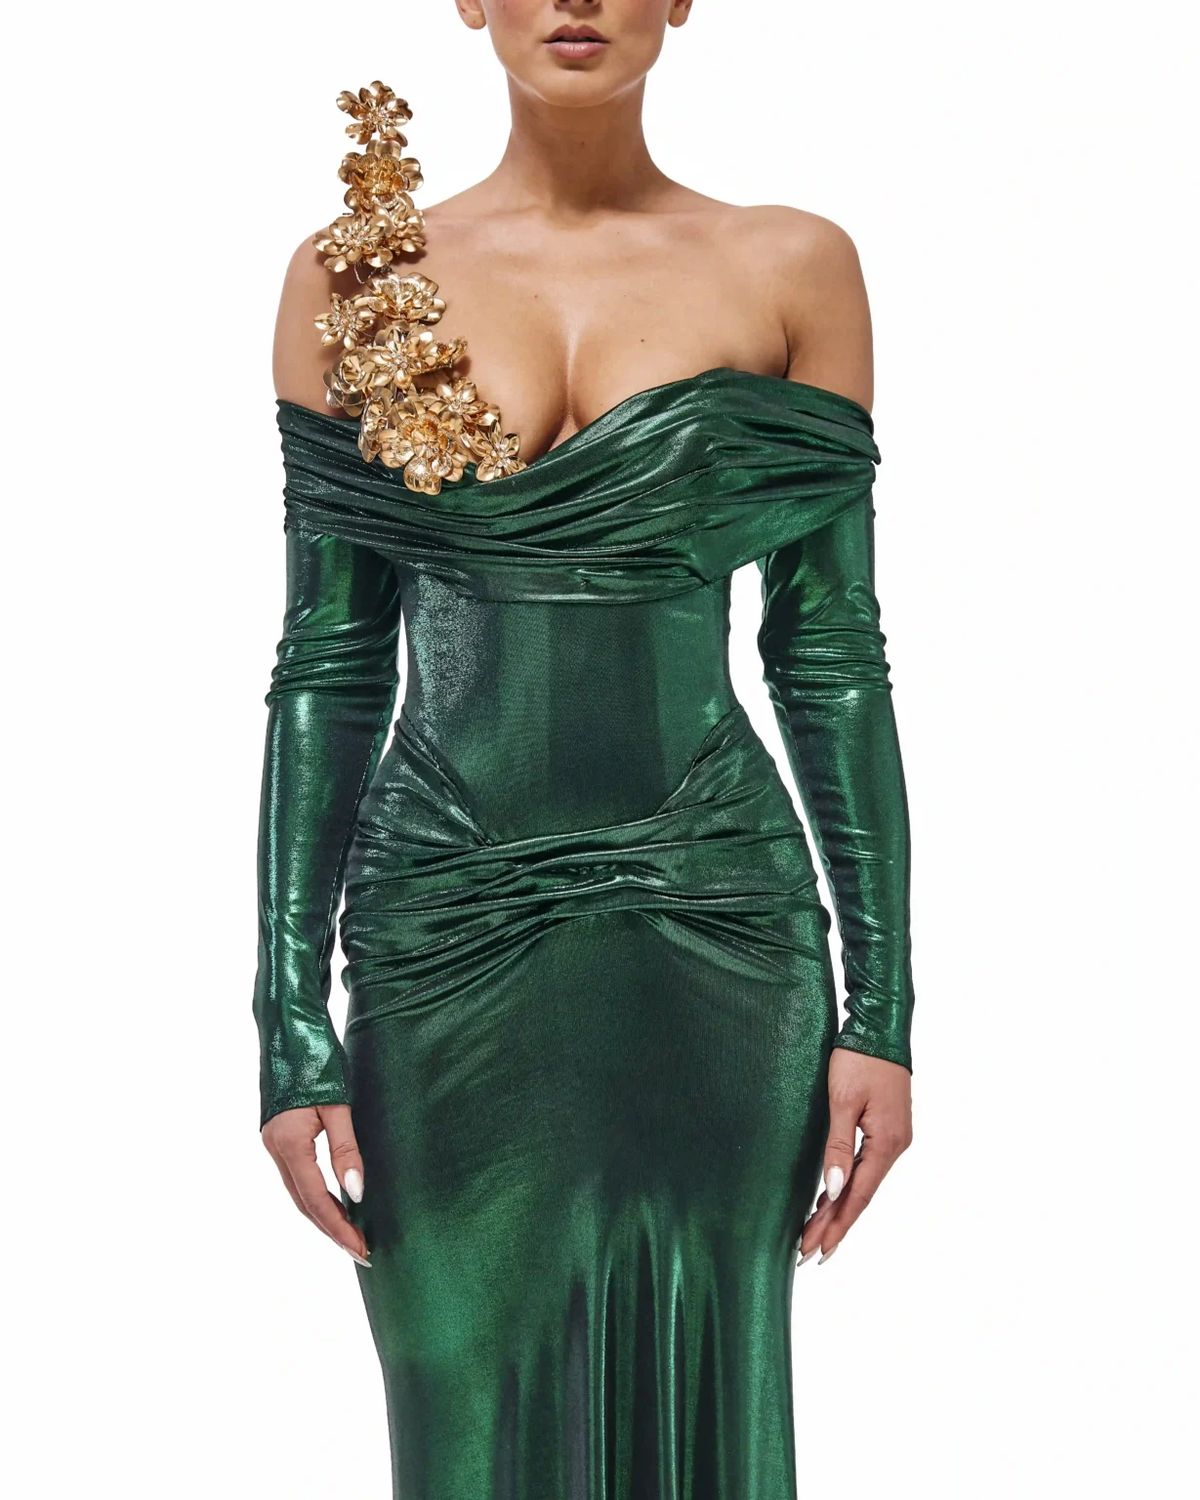 Style metallic-majesty-24-25 Valdrin Sahiti Size M Pageant Green Mermaid Dress on Queenly